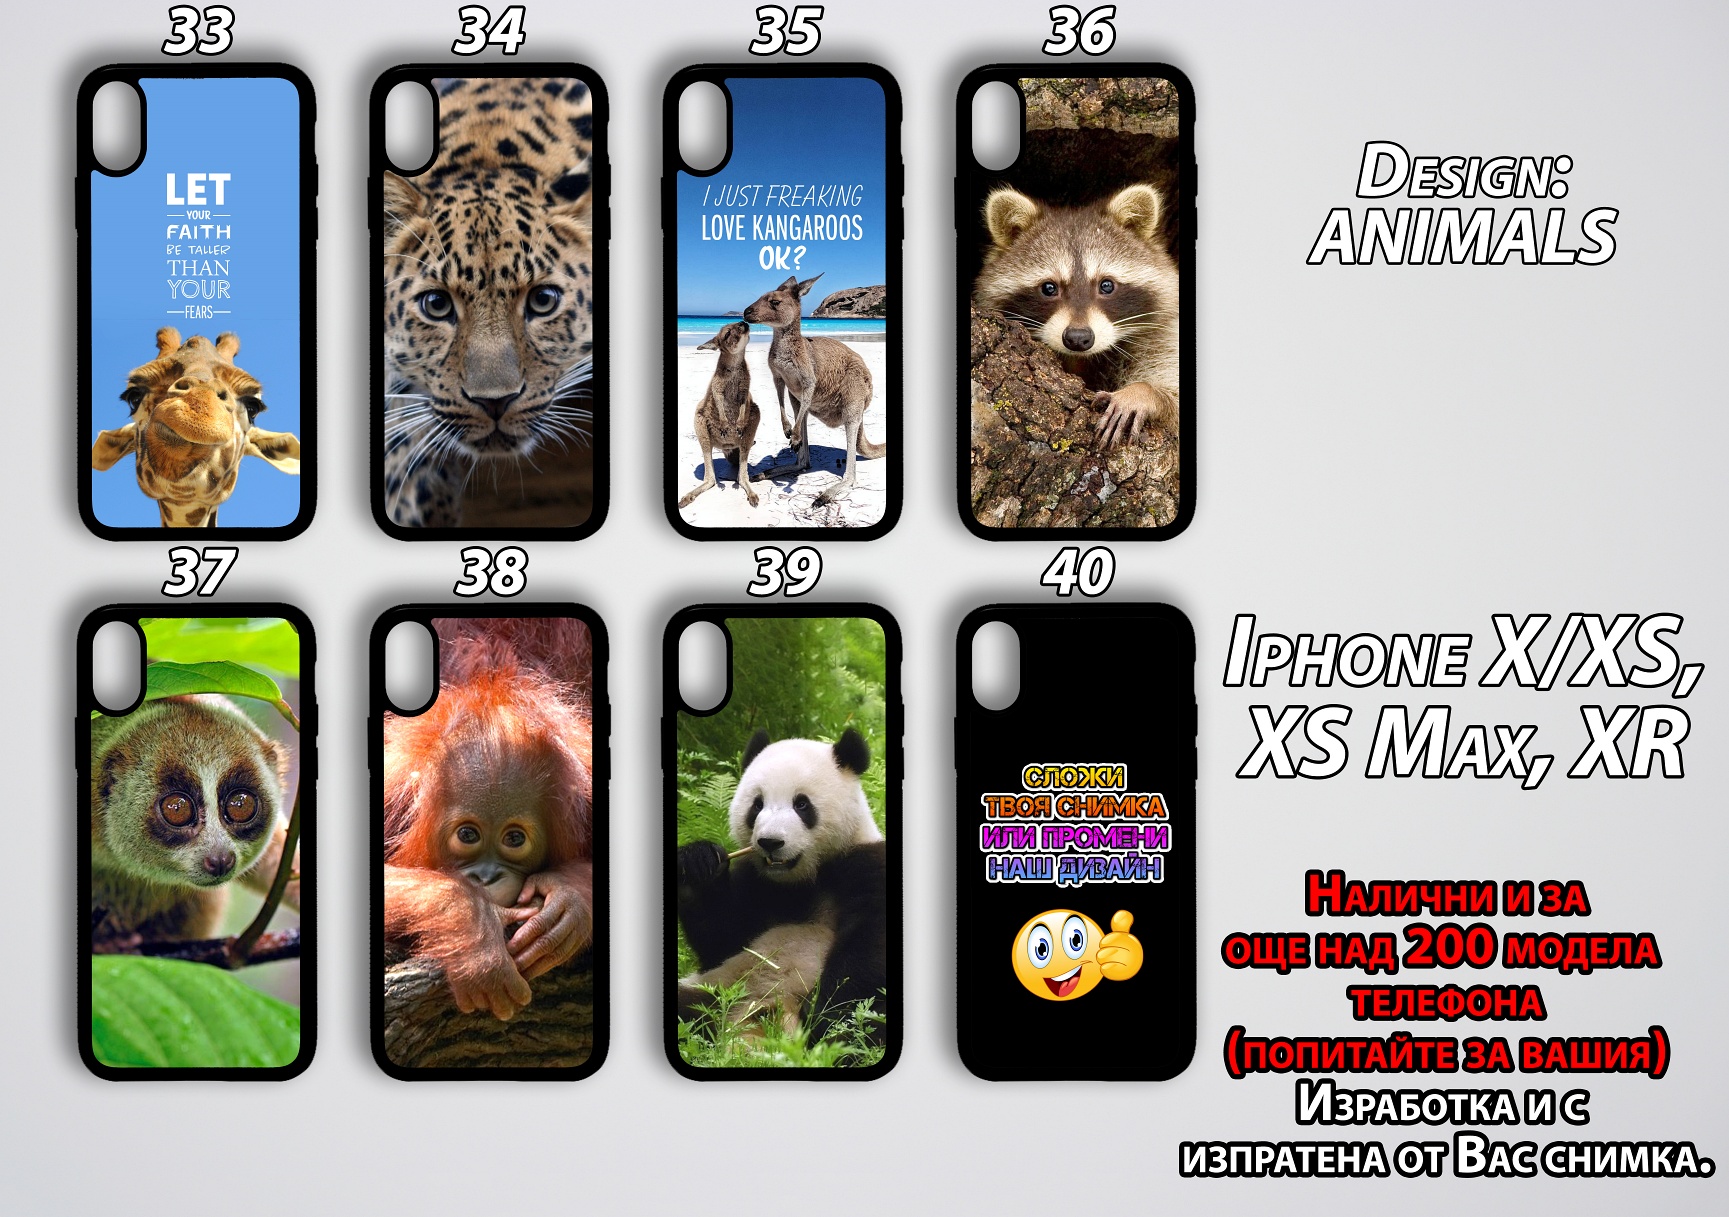 mobile phone cases NEW-Animals 33